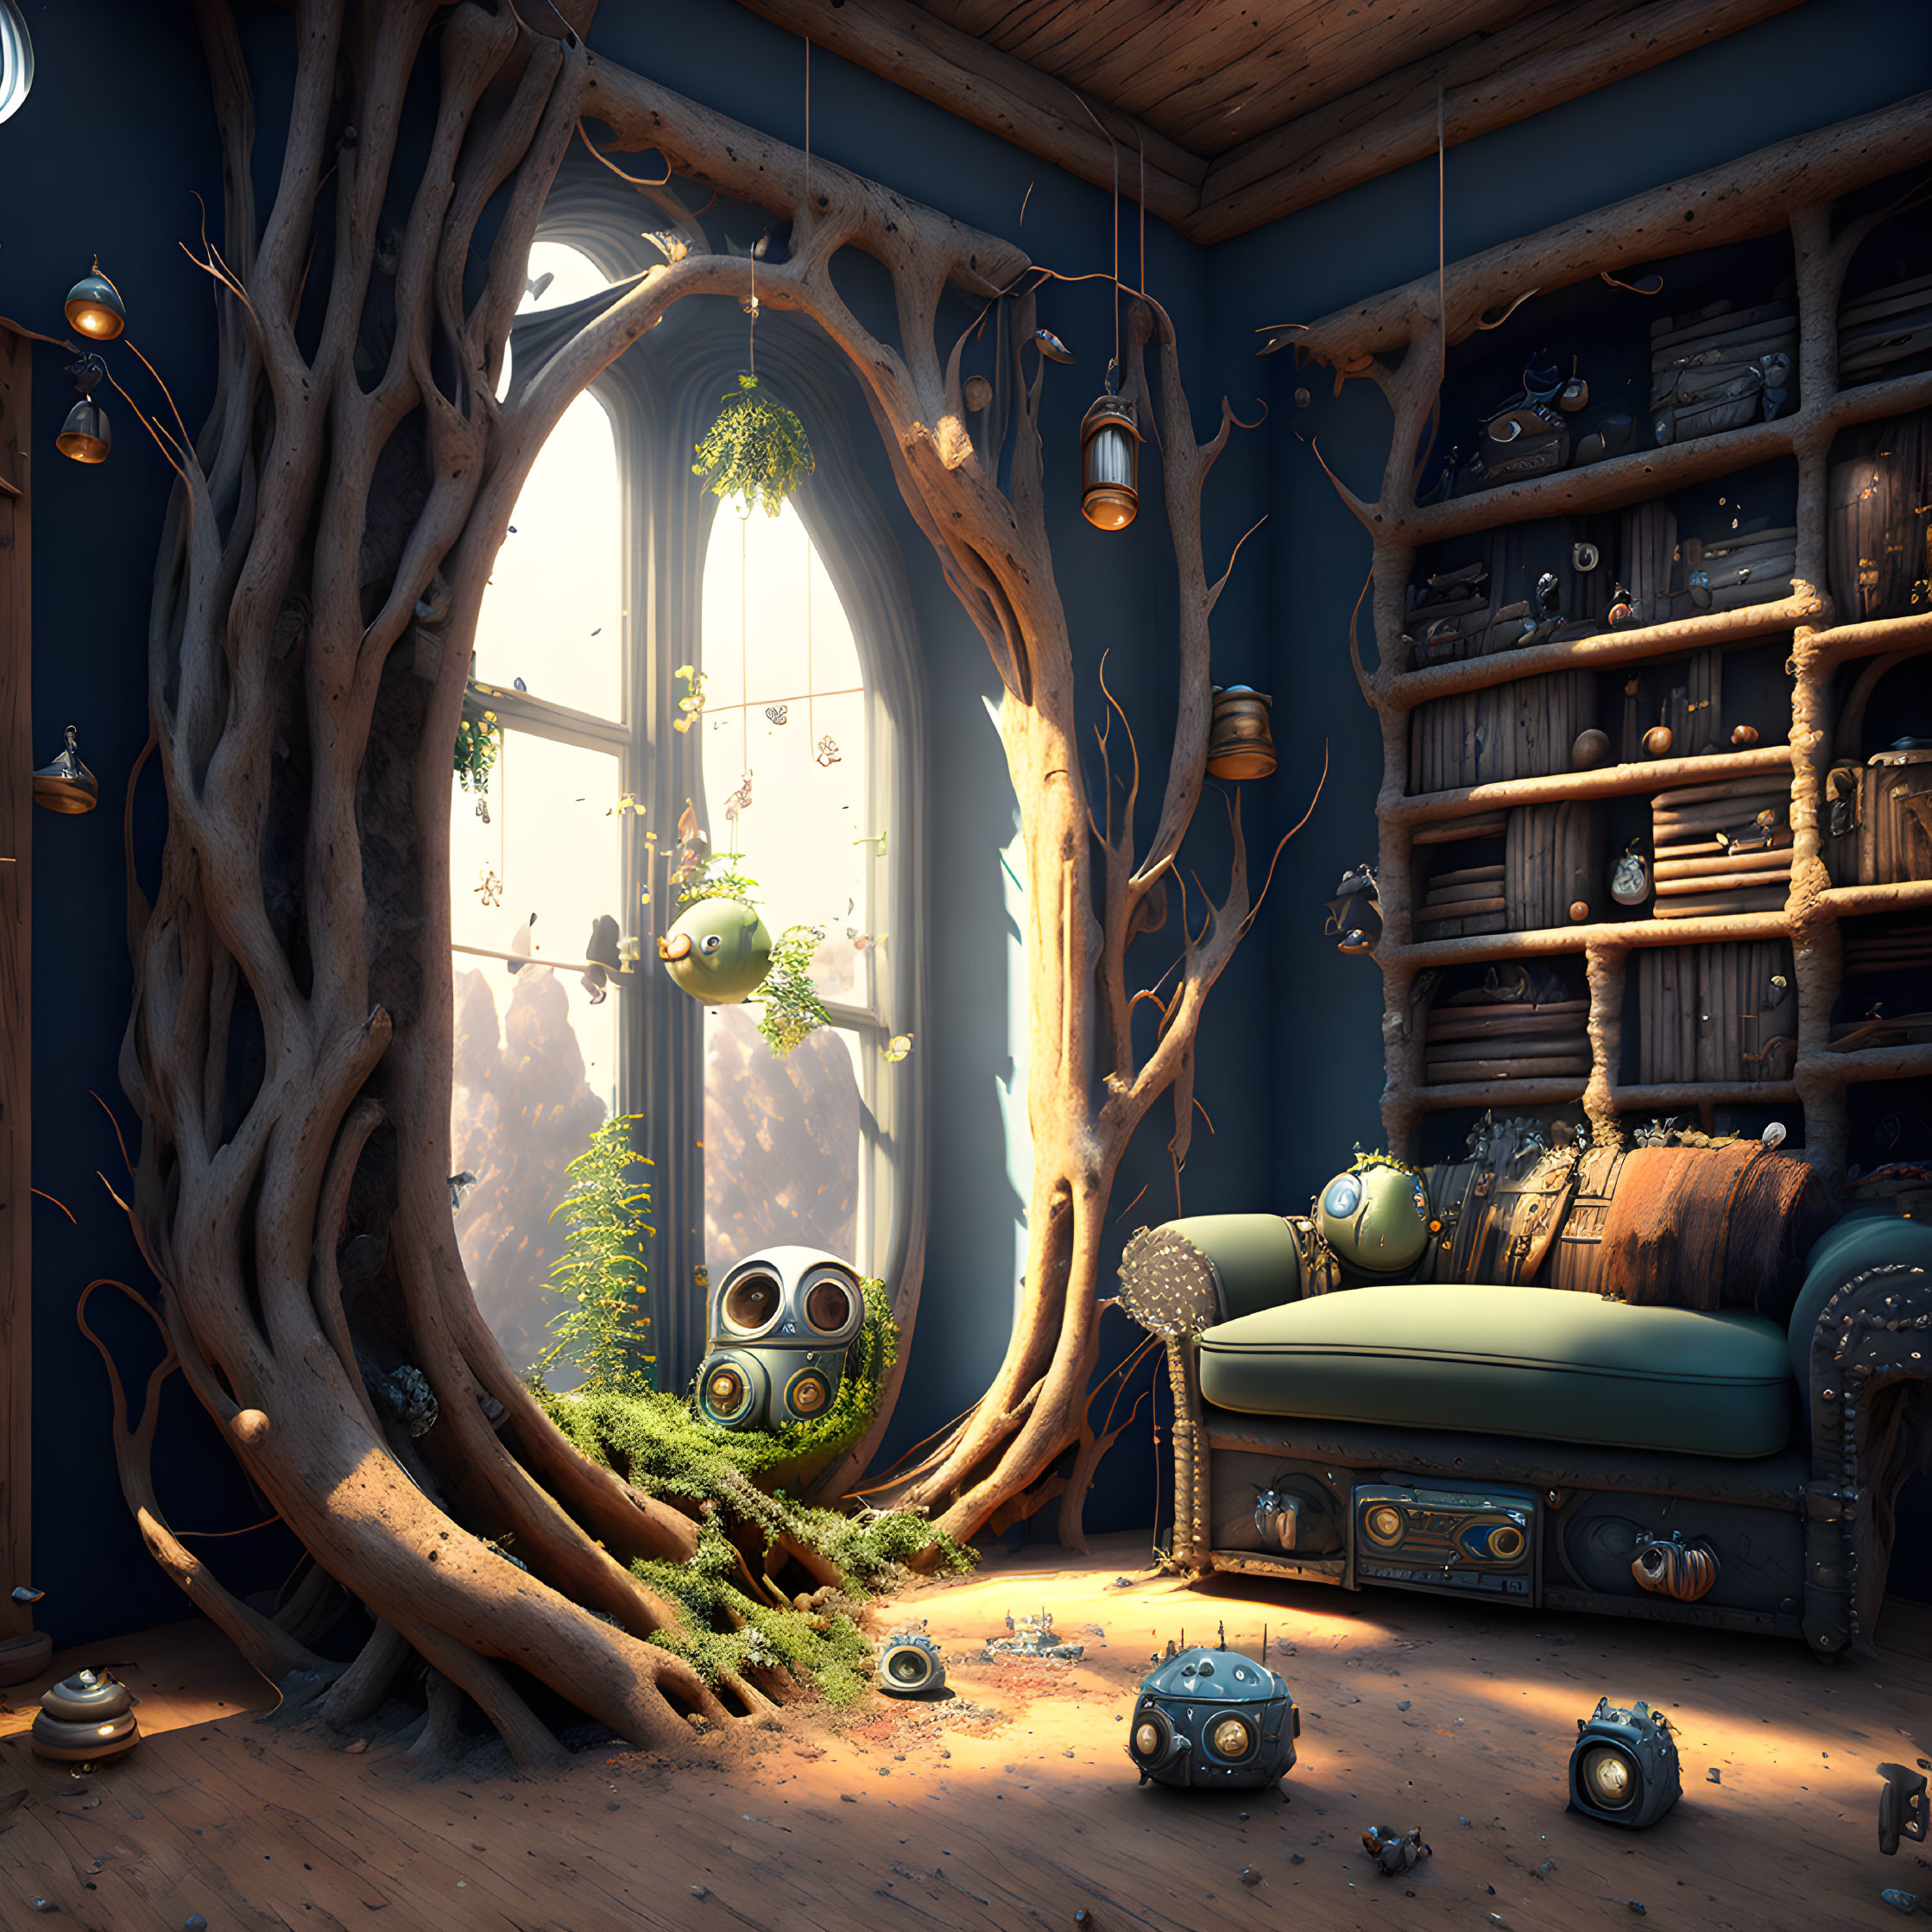 Whimsical room with tree window frame, bookshelves, sofa, lanterns, and robot